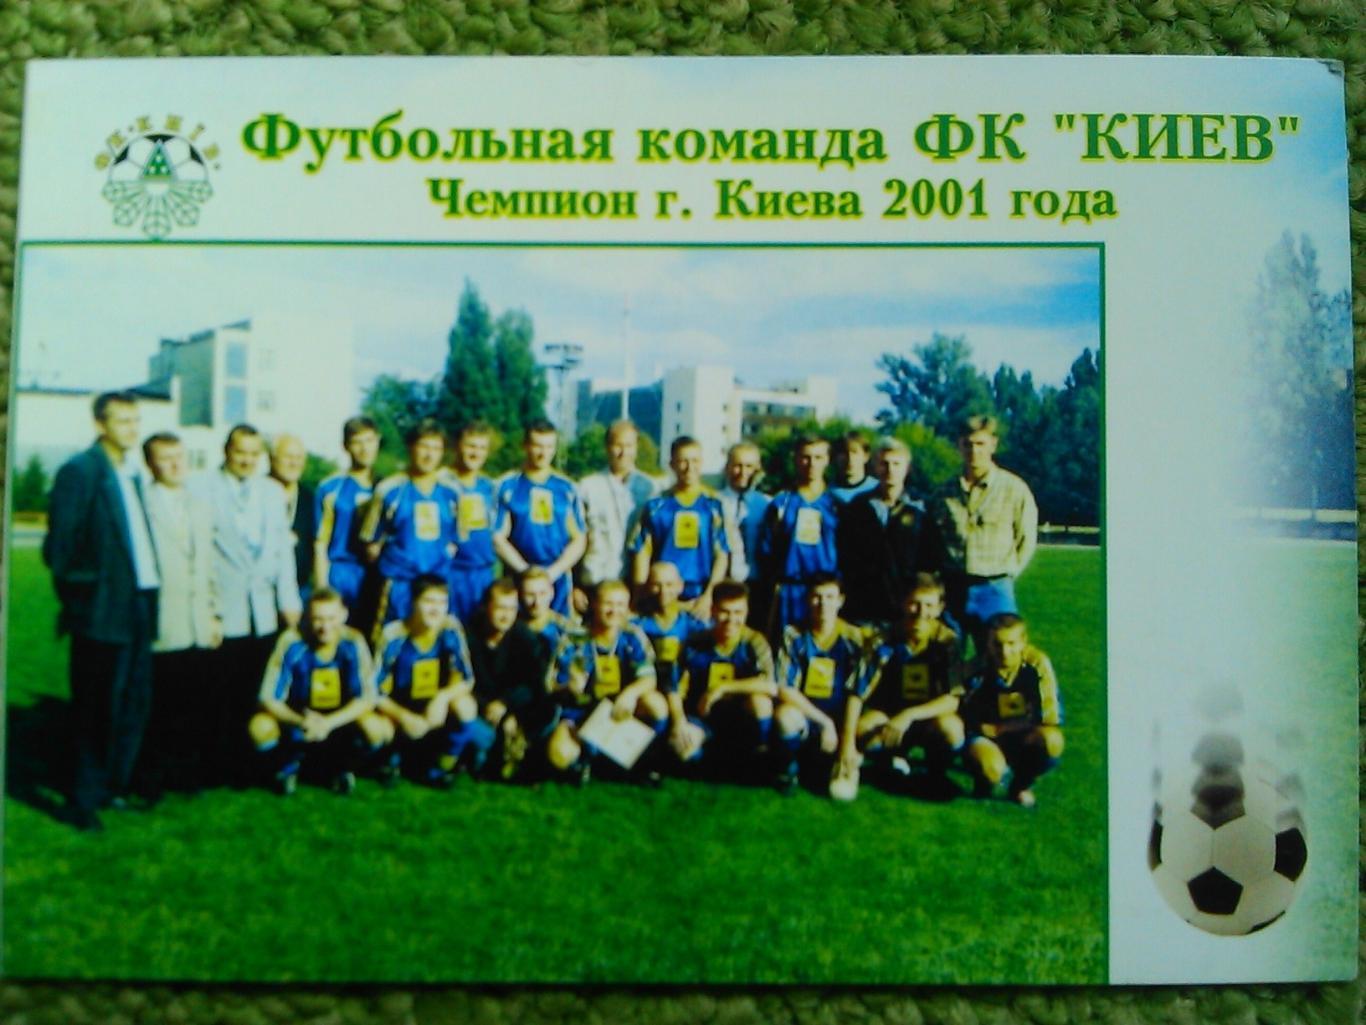 ФК КИЕВ чемпион Киева 2001 -календарик 2002. Оптом скидки до 45%!